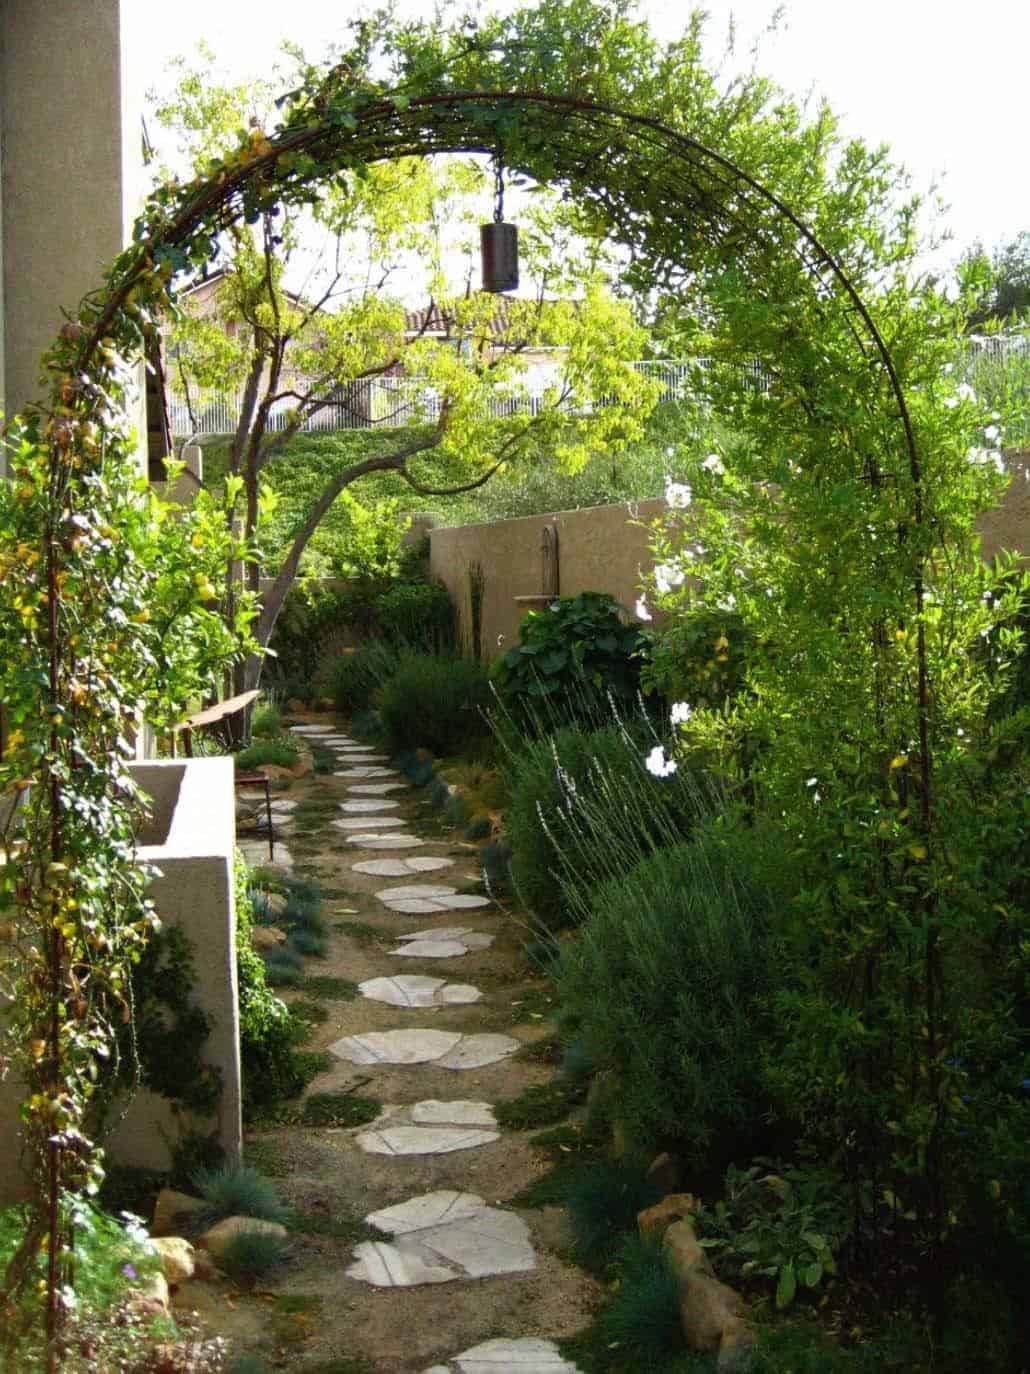 Creatice Stone Garden Design Ideas for Simple Design